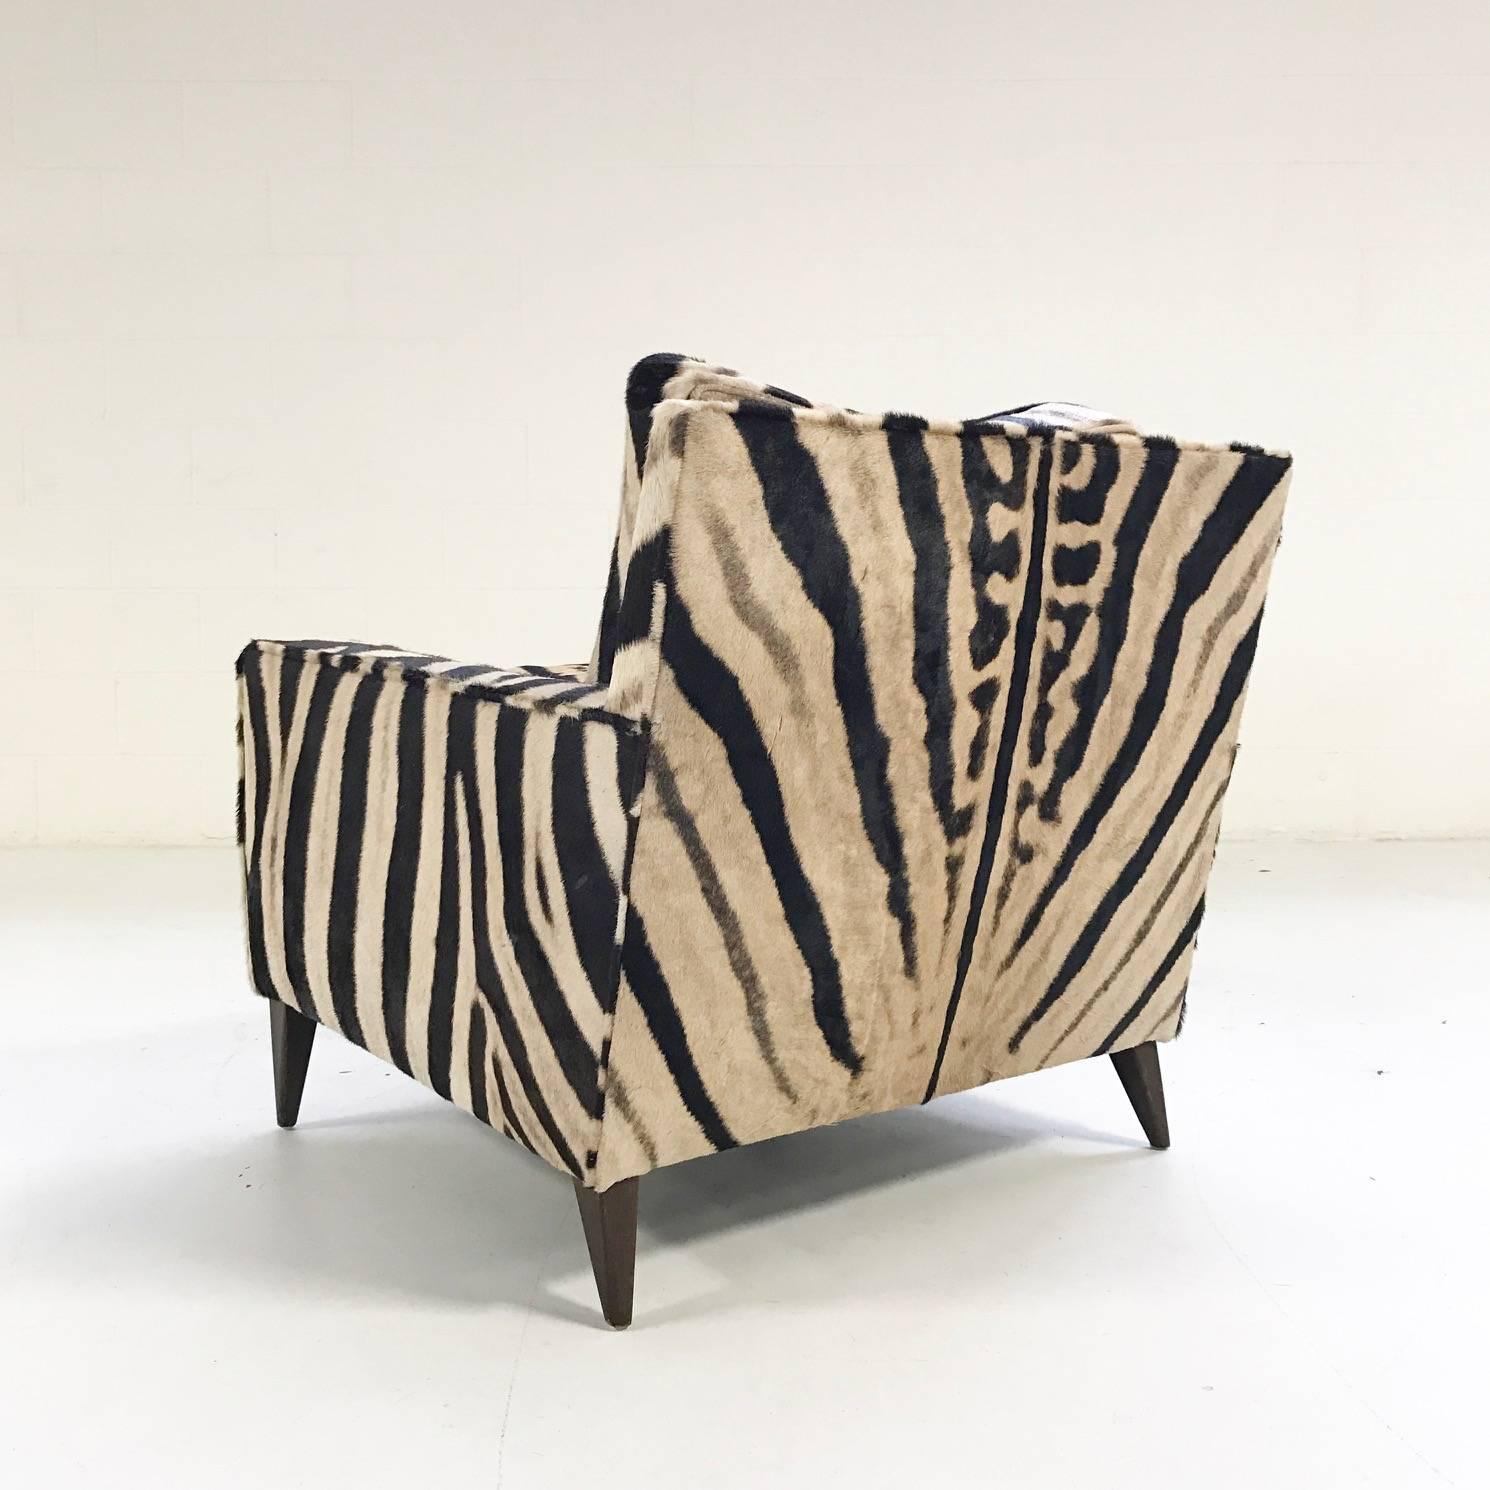 20th Century Paul McCobb for Custom Craft Lounge Chair Restored in Zebra